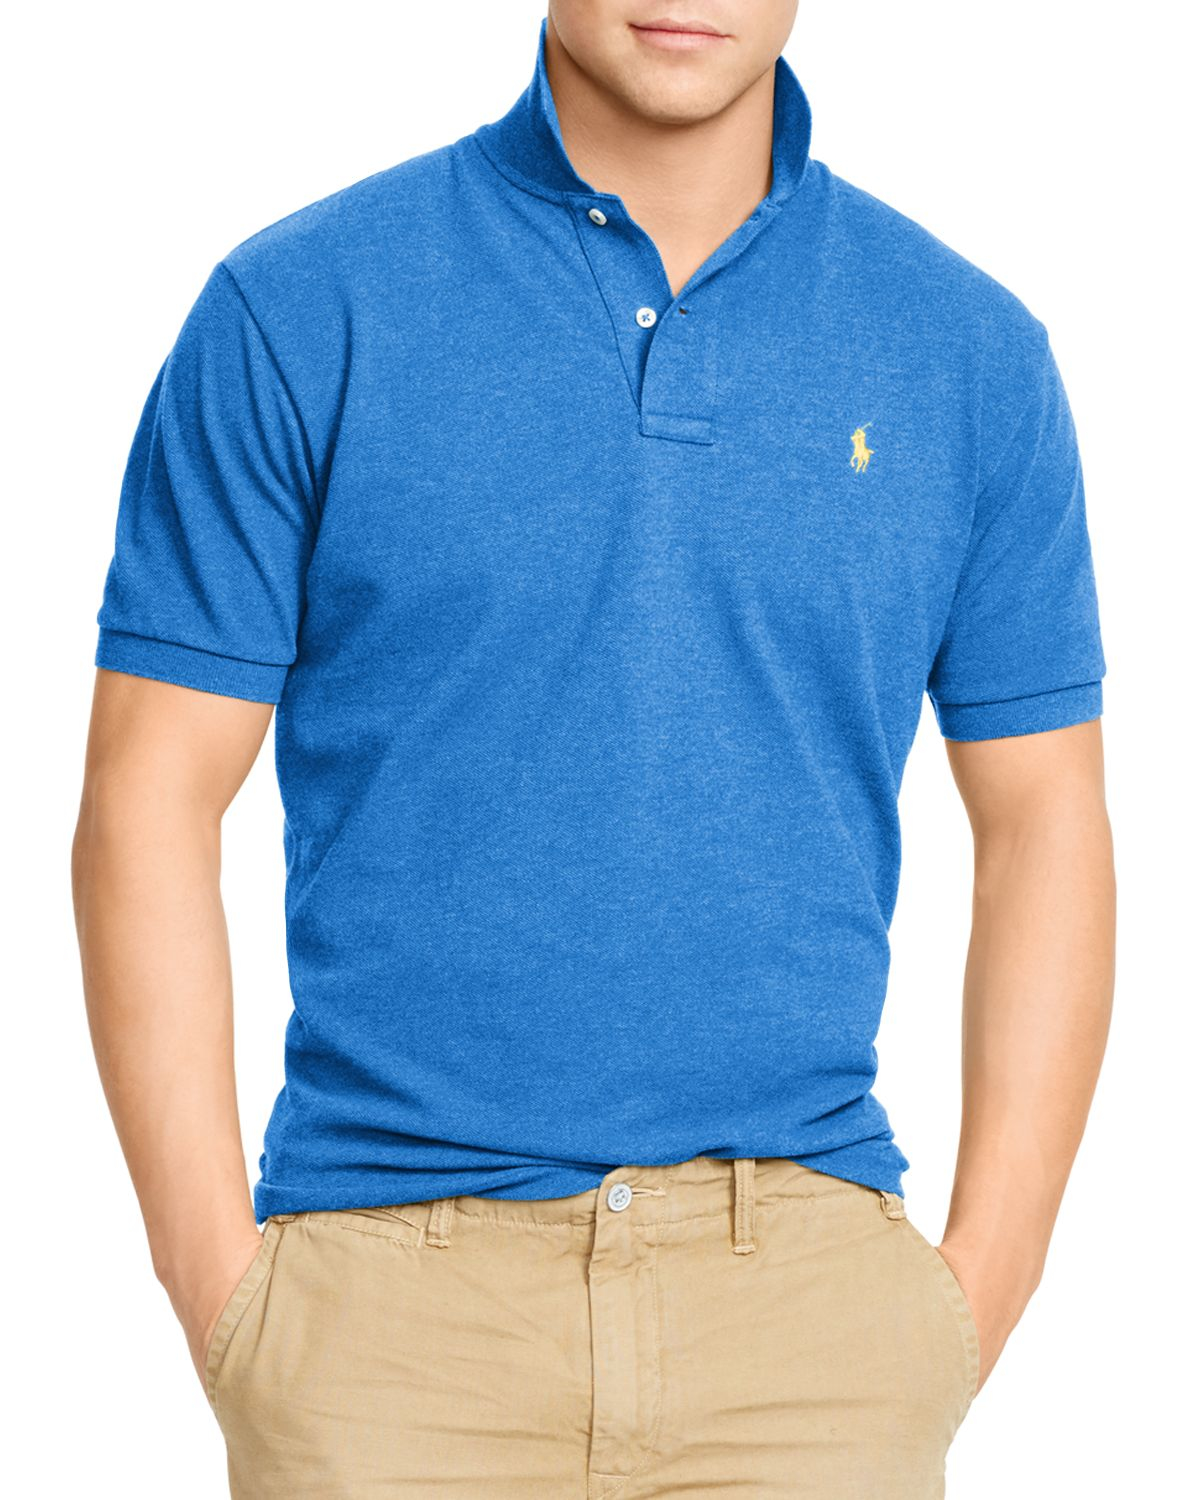 Ralph Lauren Polo Slim-Fit Mesh Polo Shirt in Blue for Men - Lyst